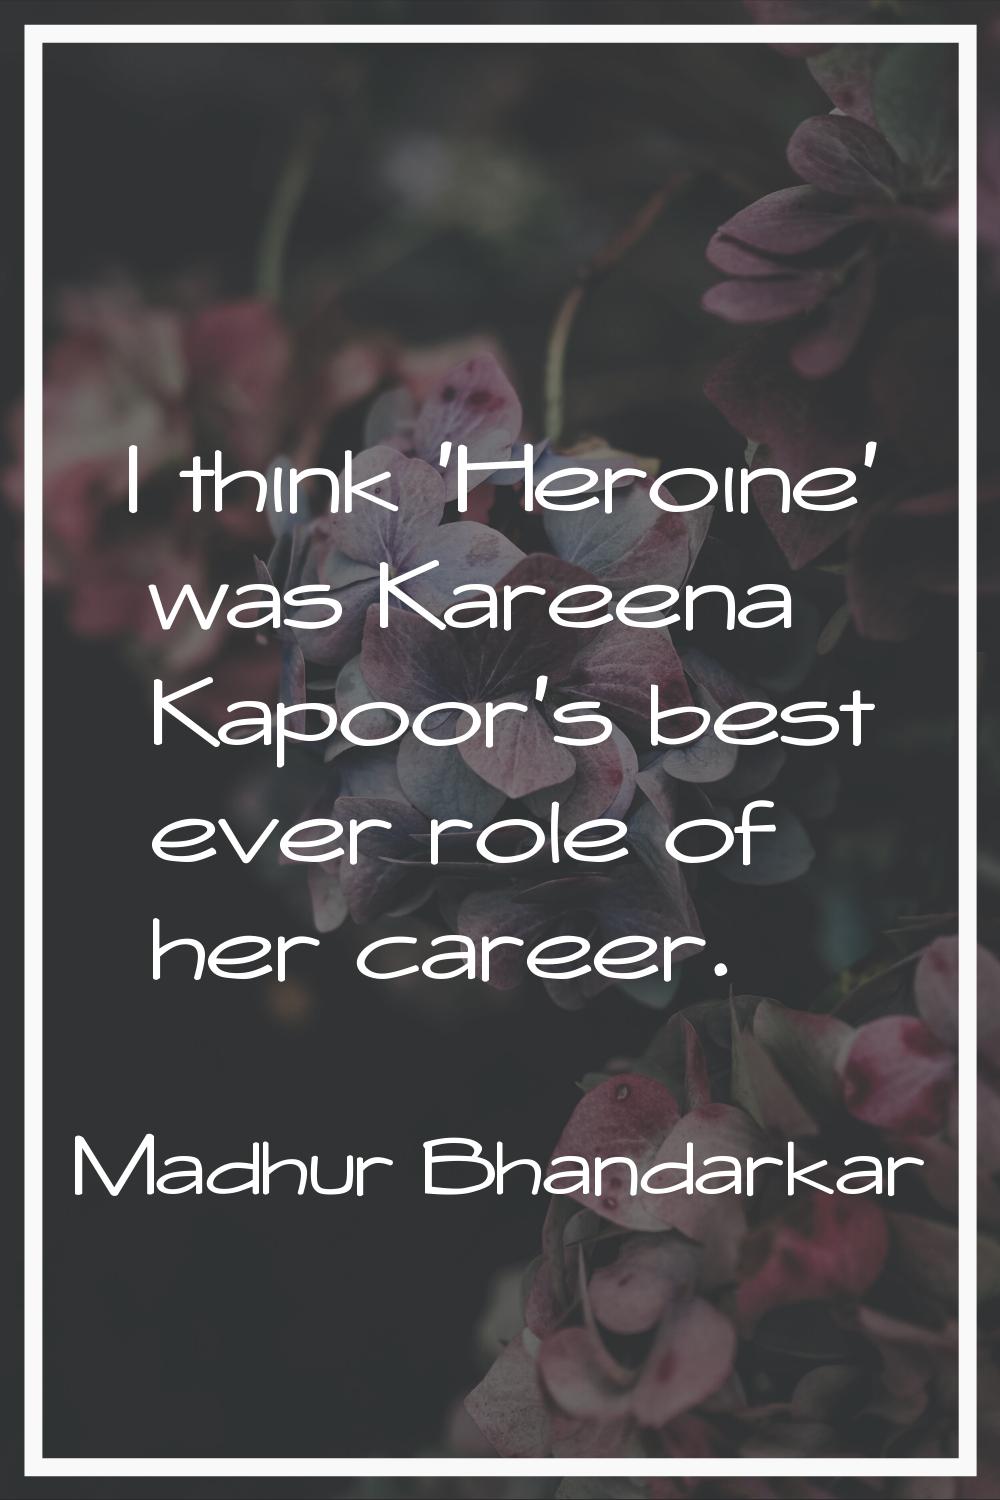 I think 'Heroine' was Kareena Kapoor's best ever role of her career.